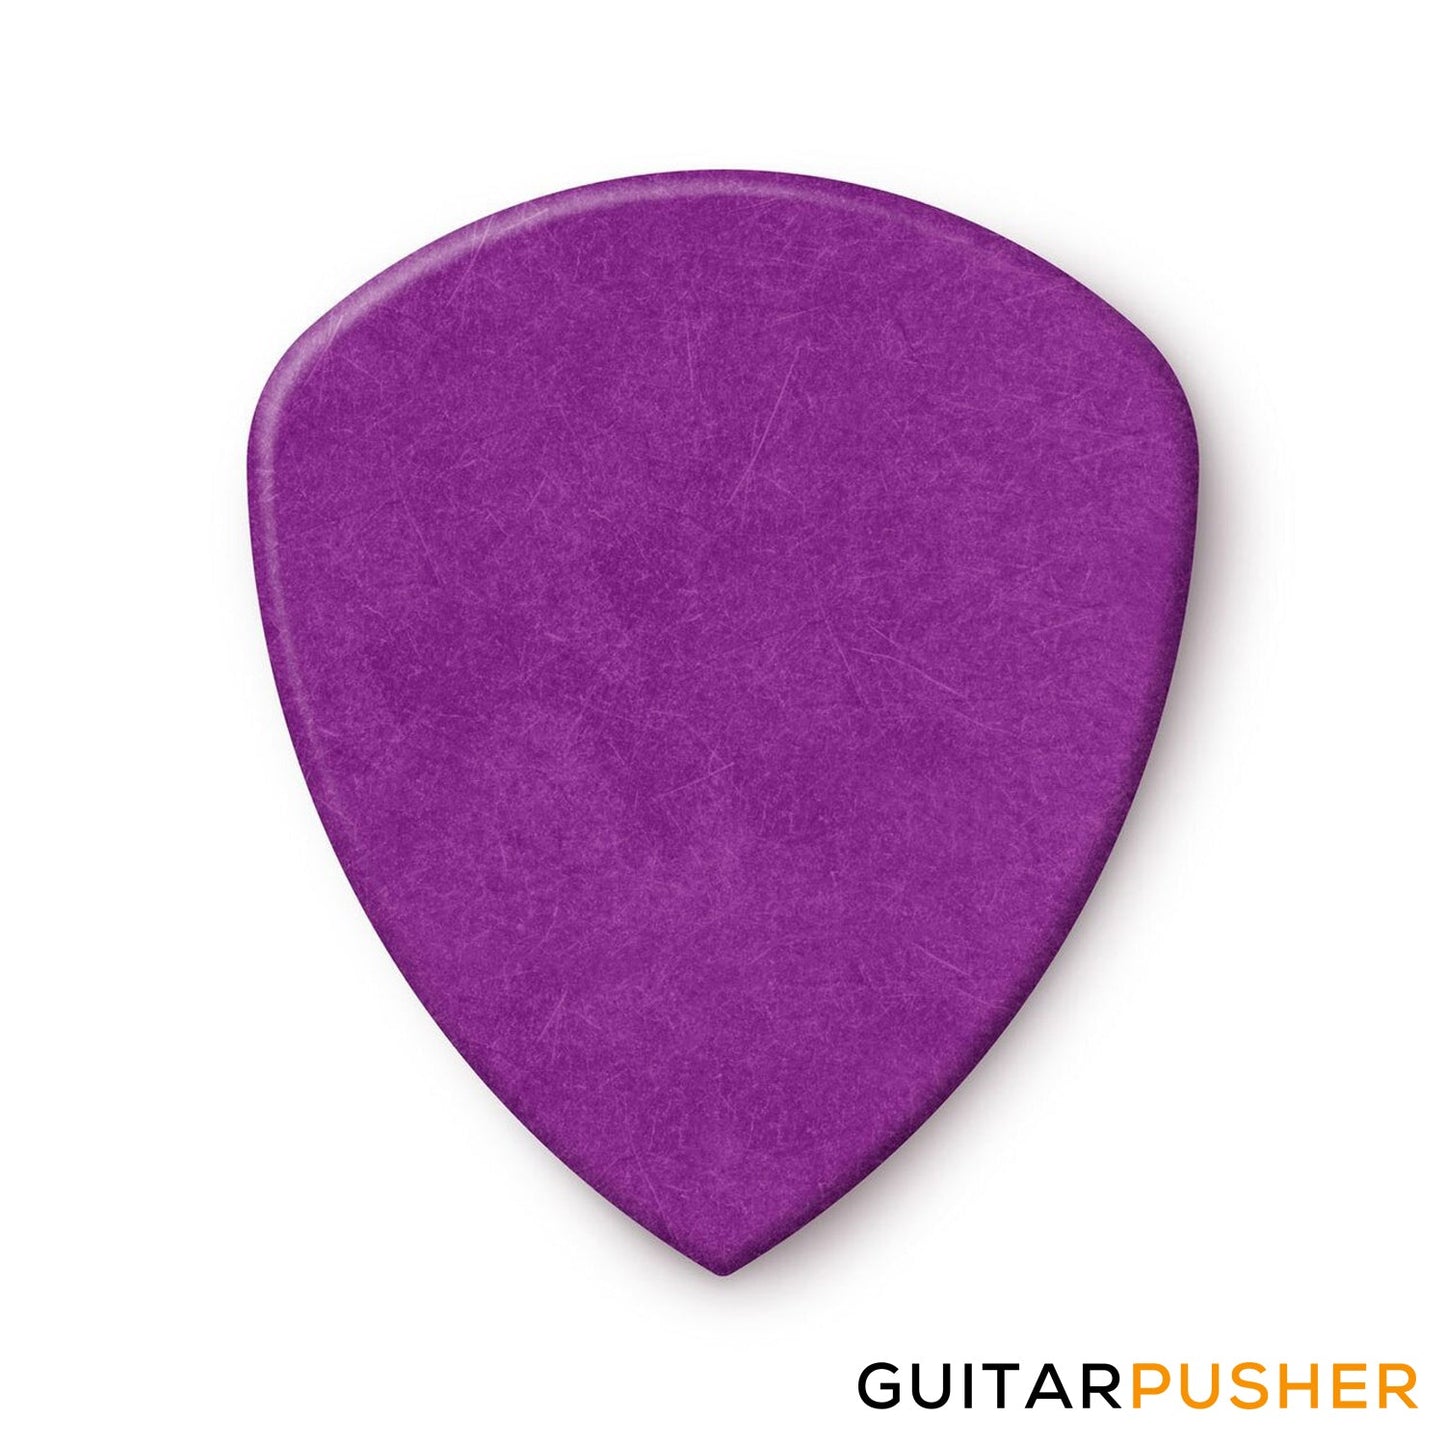 Dunlop Tortex Flow Guitar Pick 558R - 1.14mm Purple